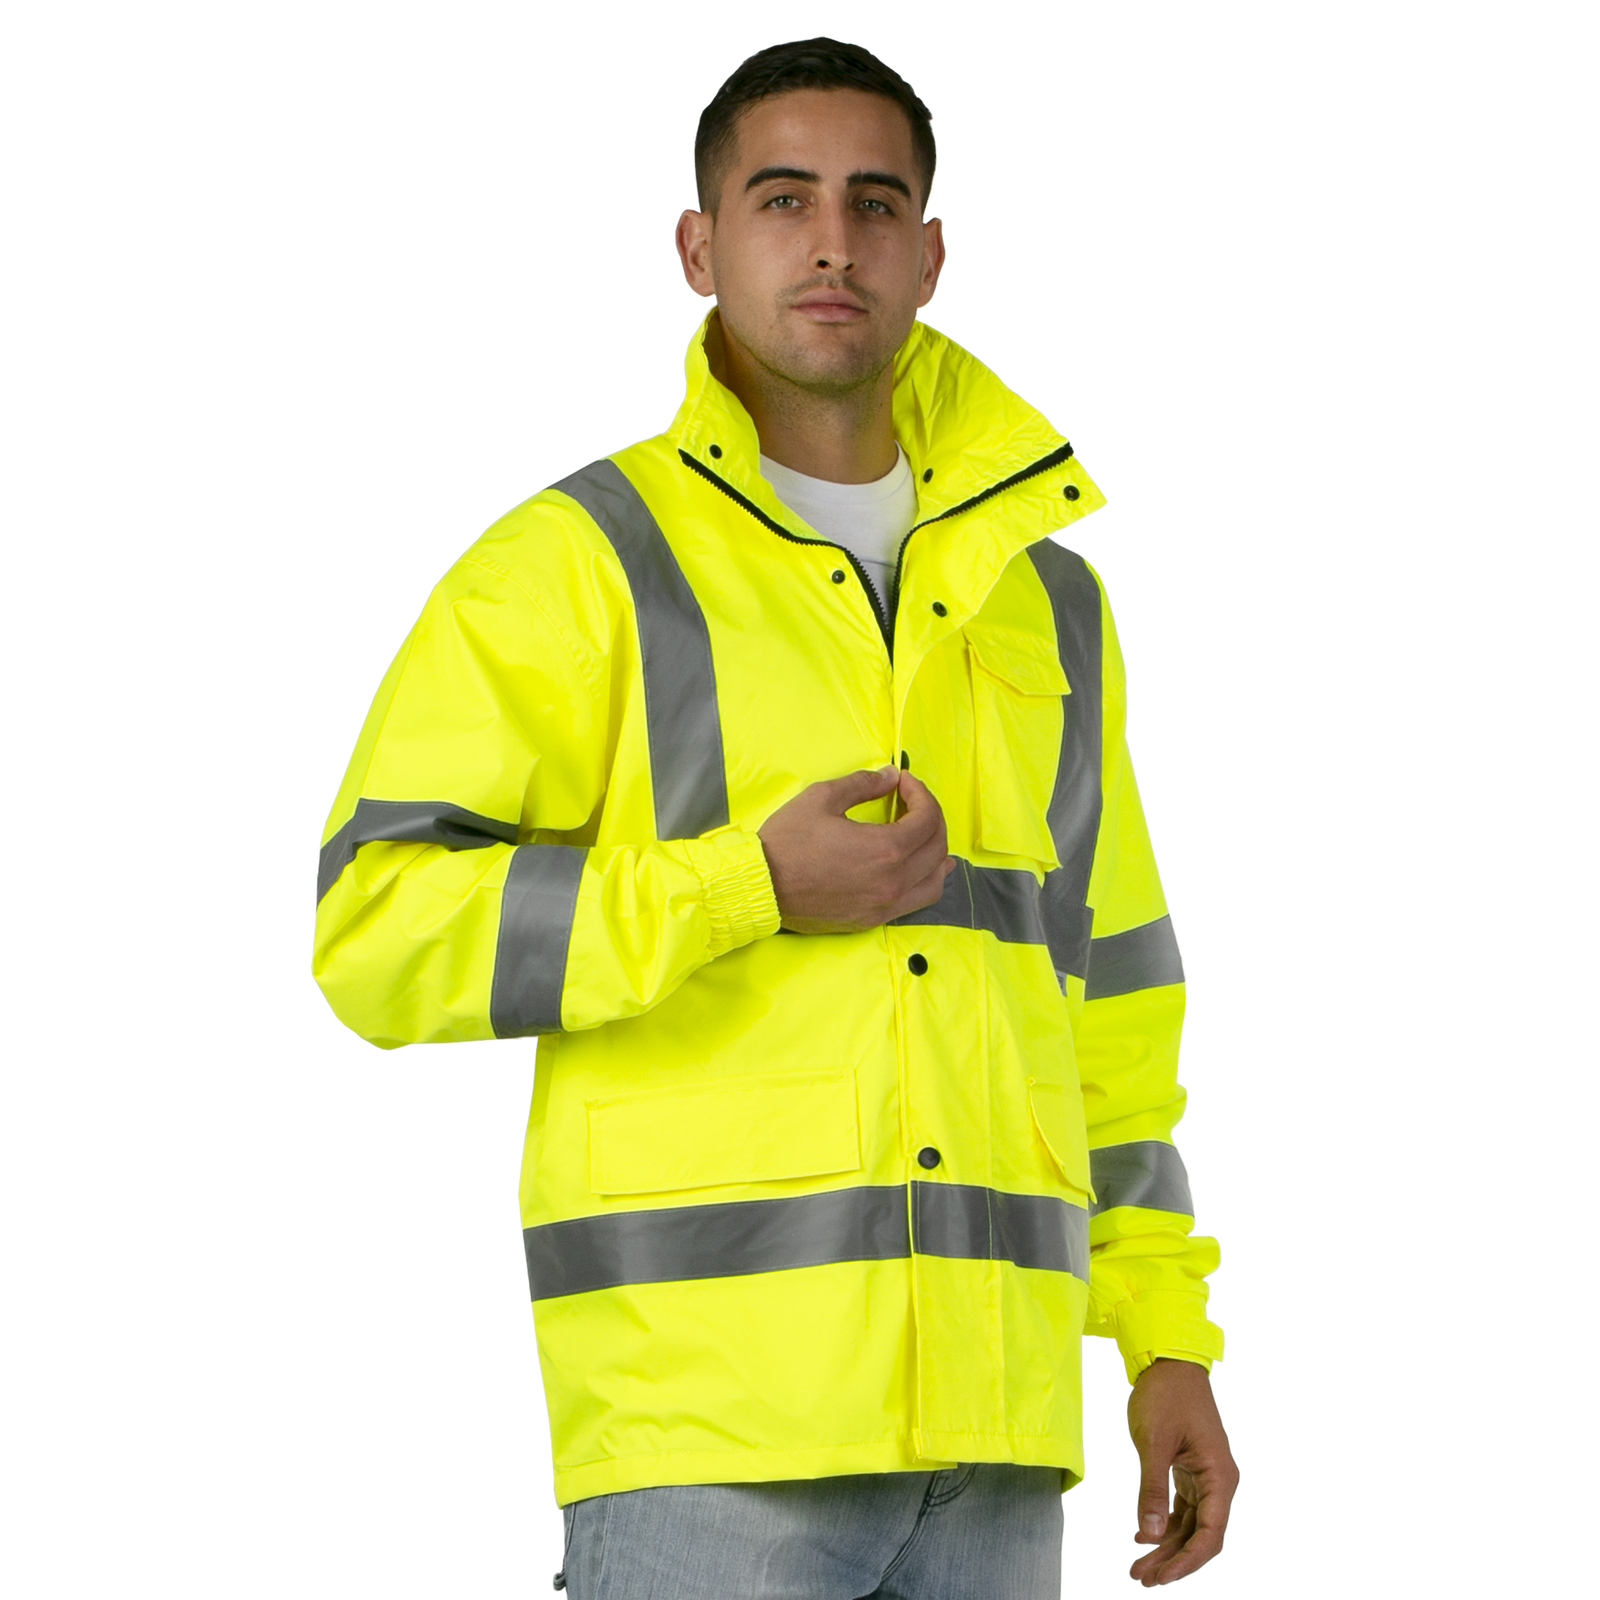 Man wearing the high visibility yellow waterproof rain jacket ANSI class 3 typ R